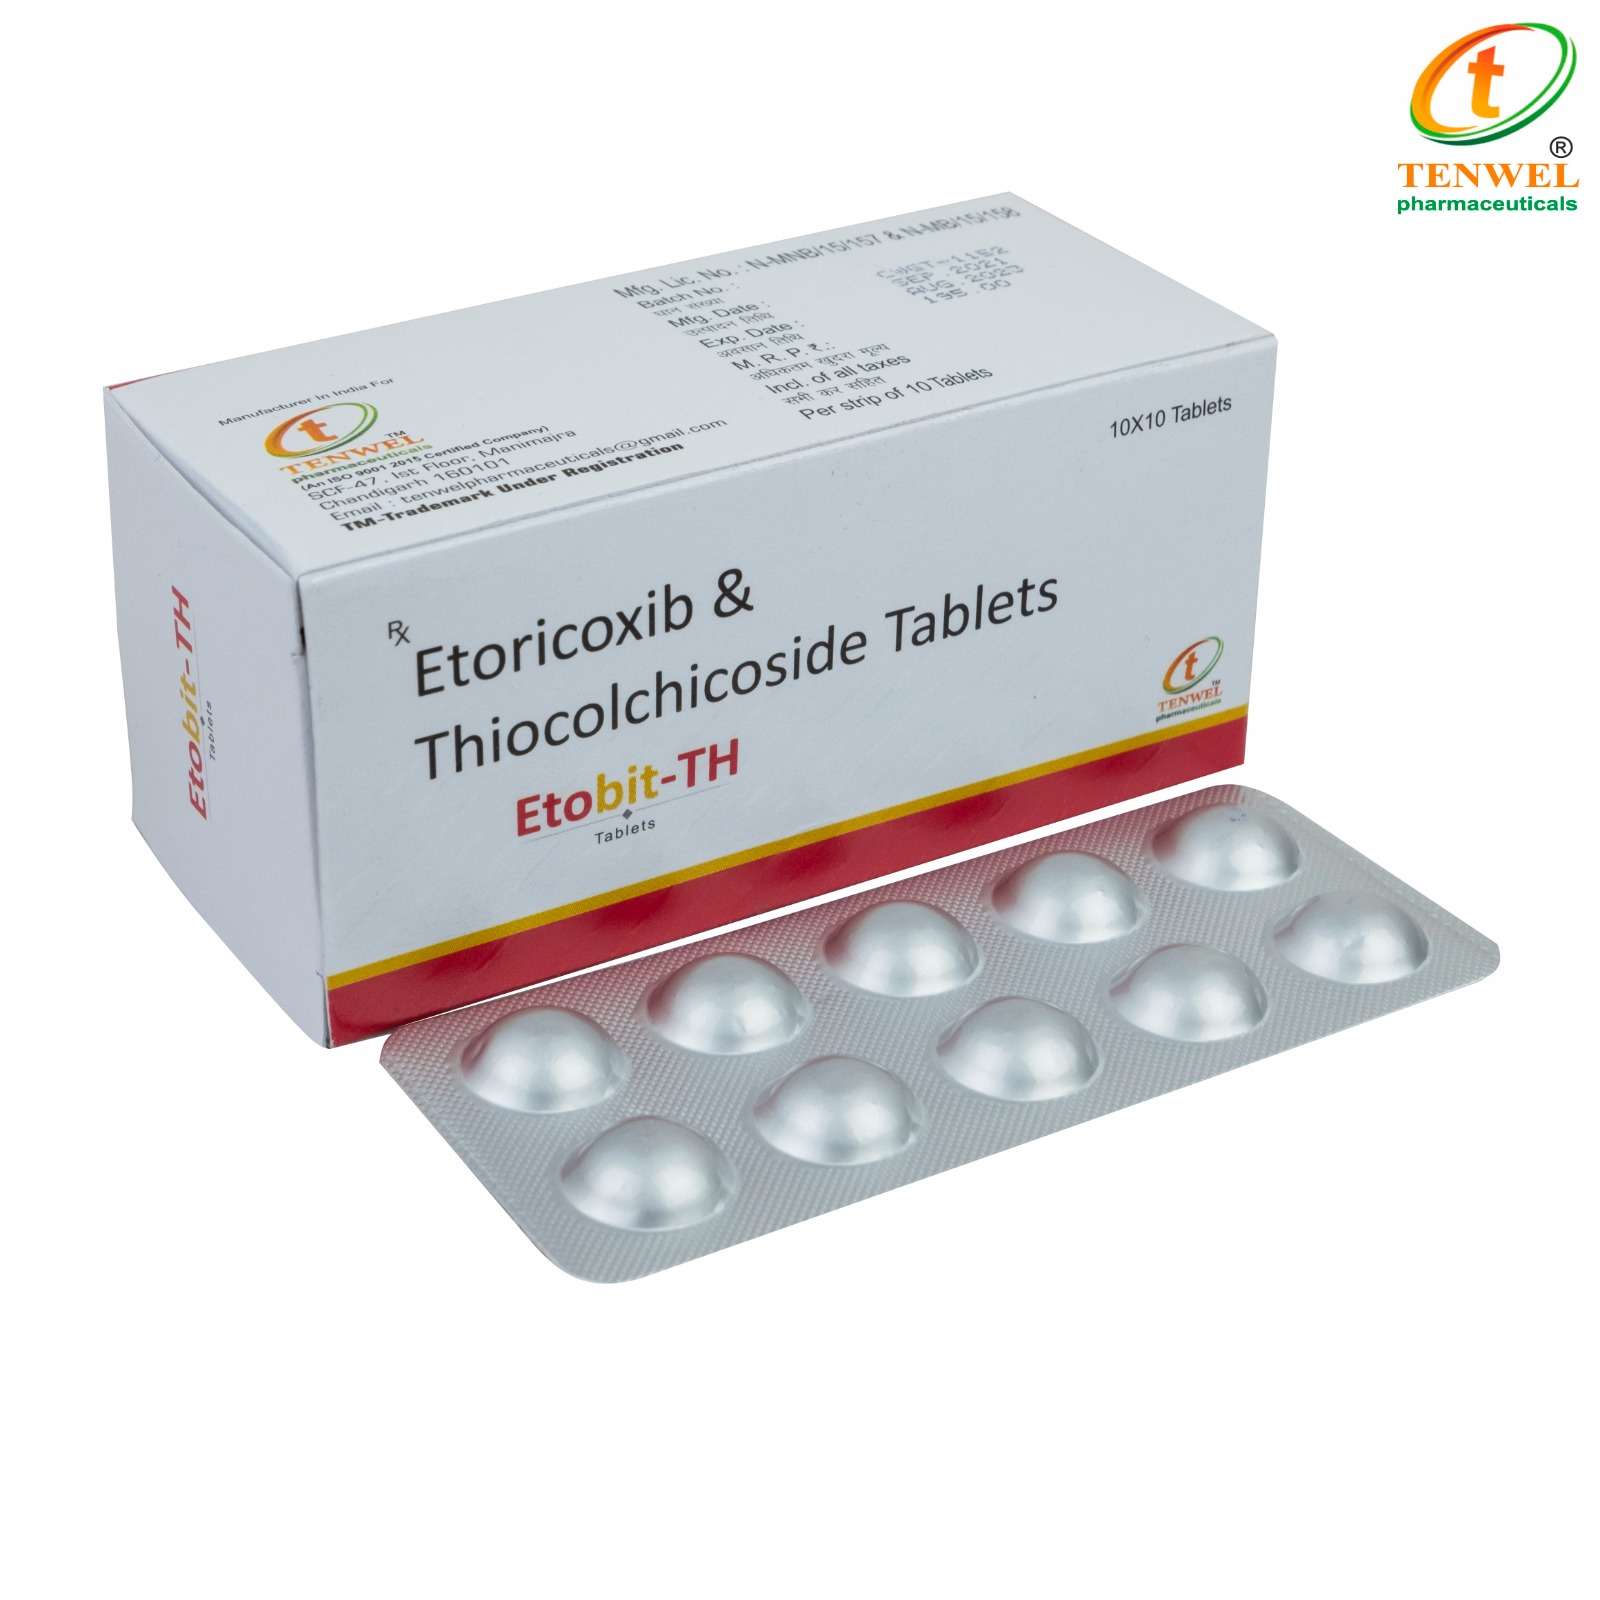 etoricoxib 60mg thiocolchicoside 4mg